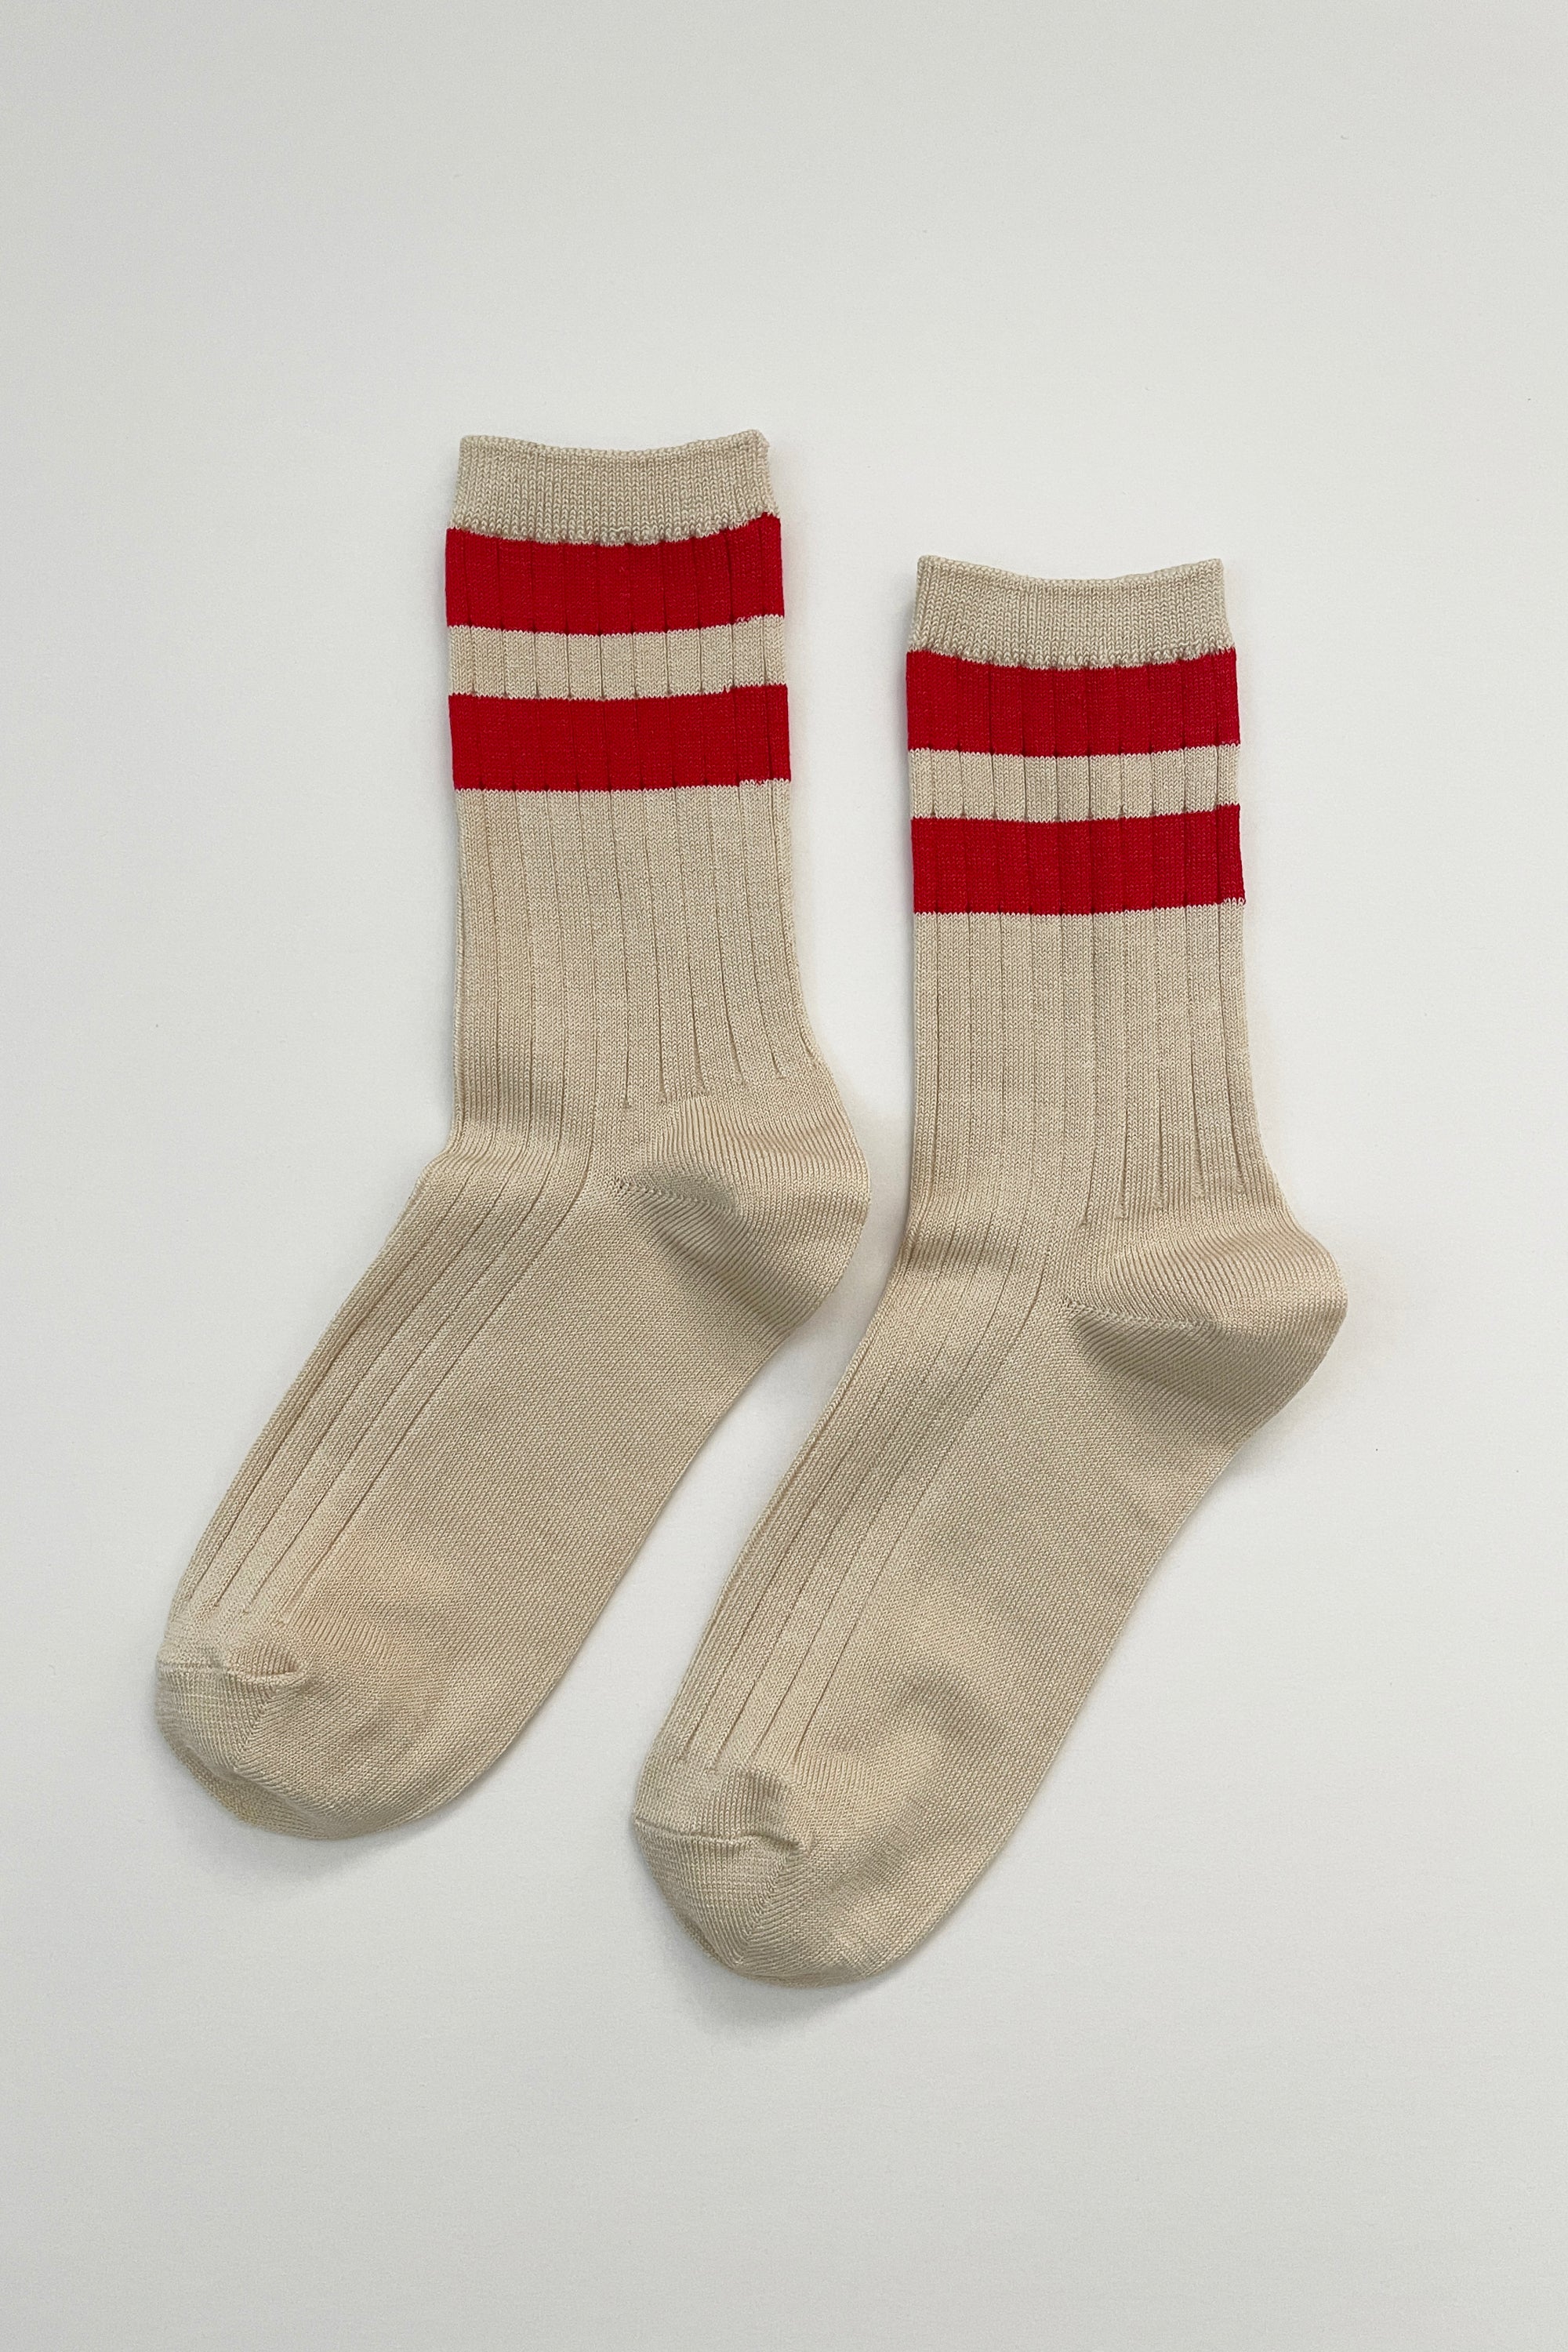 Her Socks - Varsity | Cream Red | by Le Bon Shoppe - Lifestory